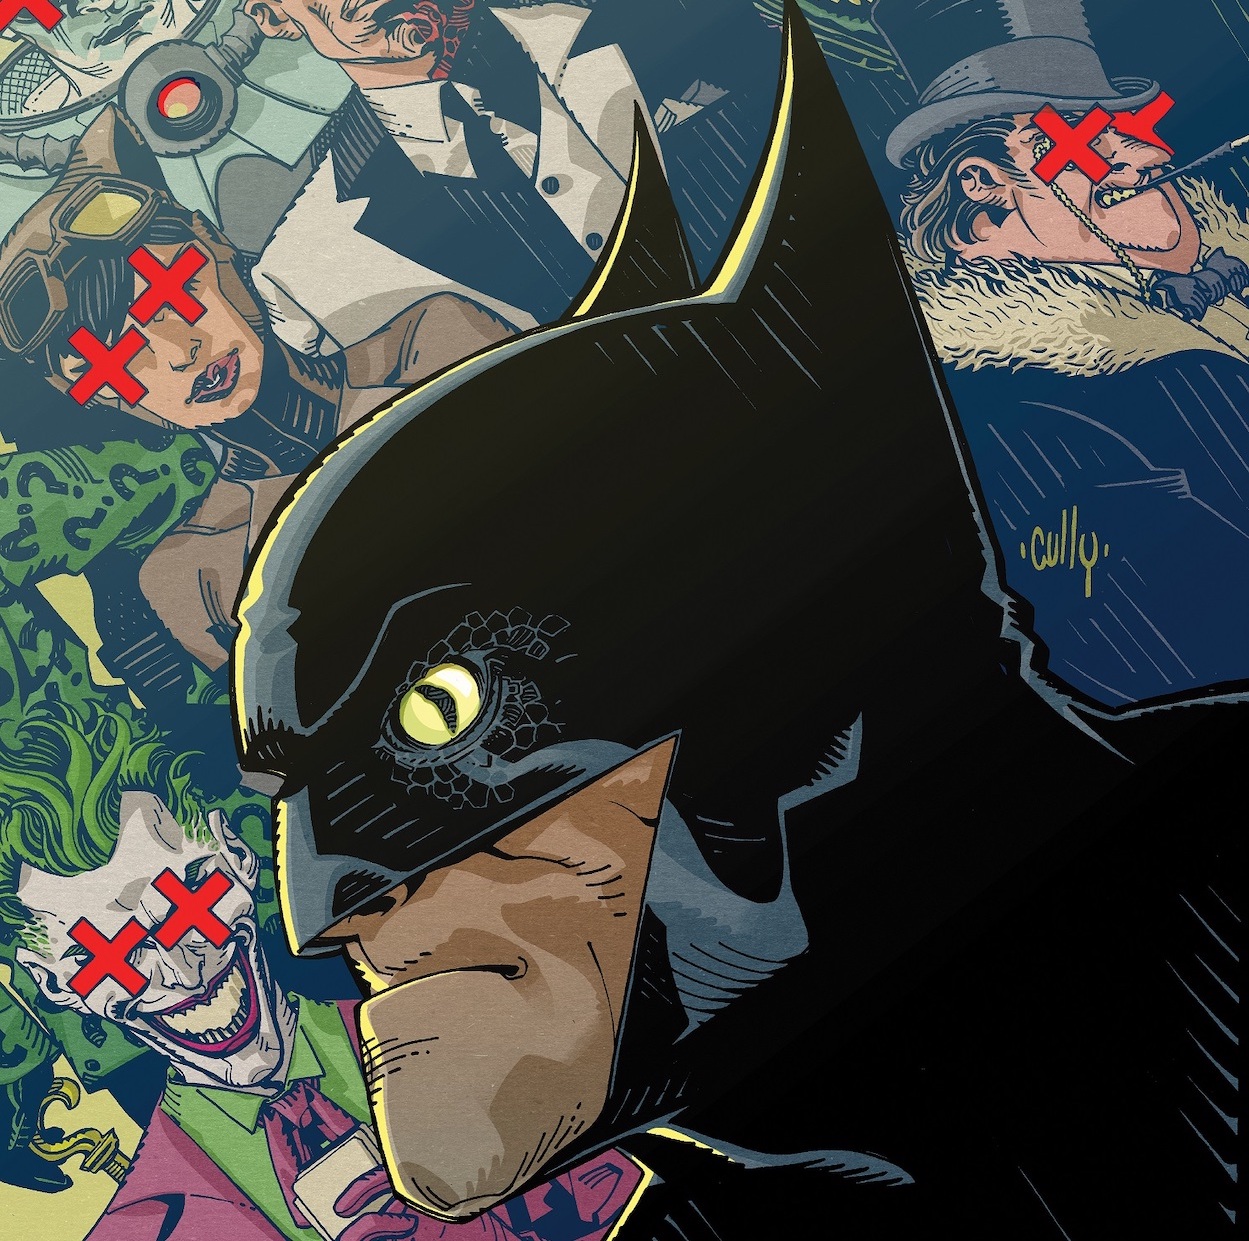 DC Comics launching Garth Ennis and Liam Sharp DC Black Label series 'Batman: Reptilian'